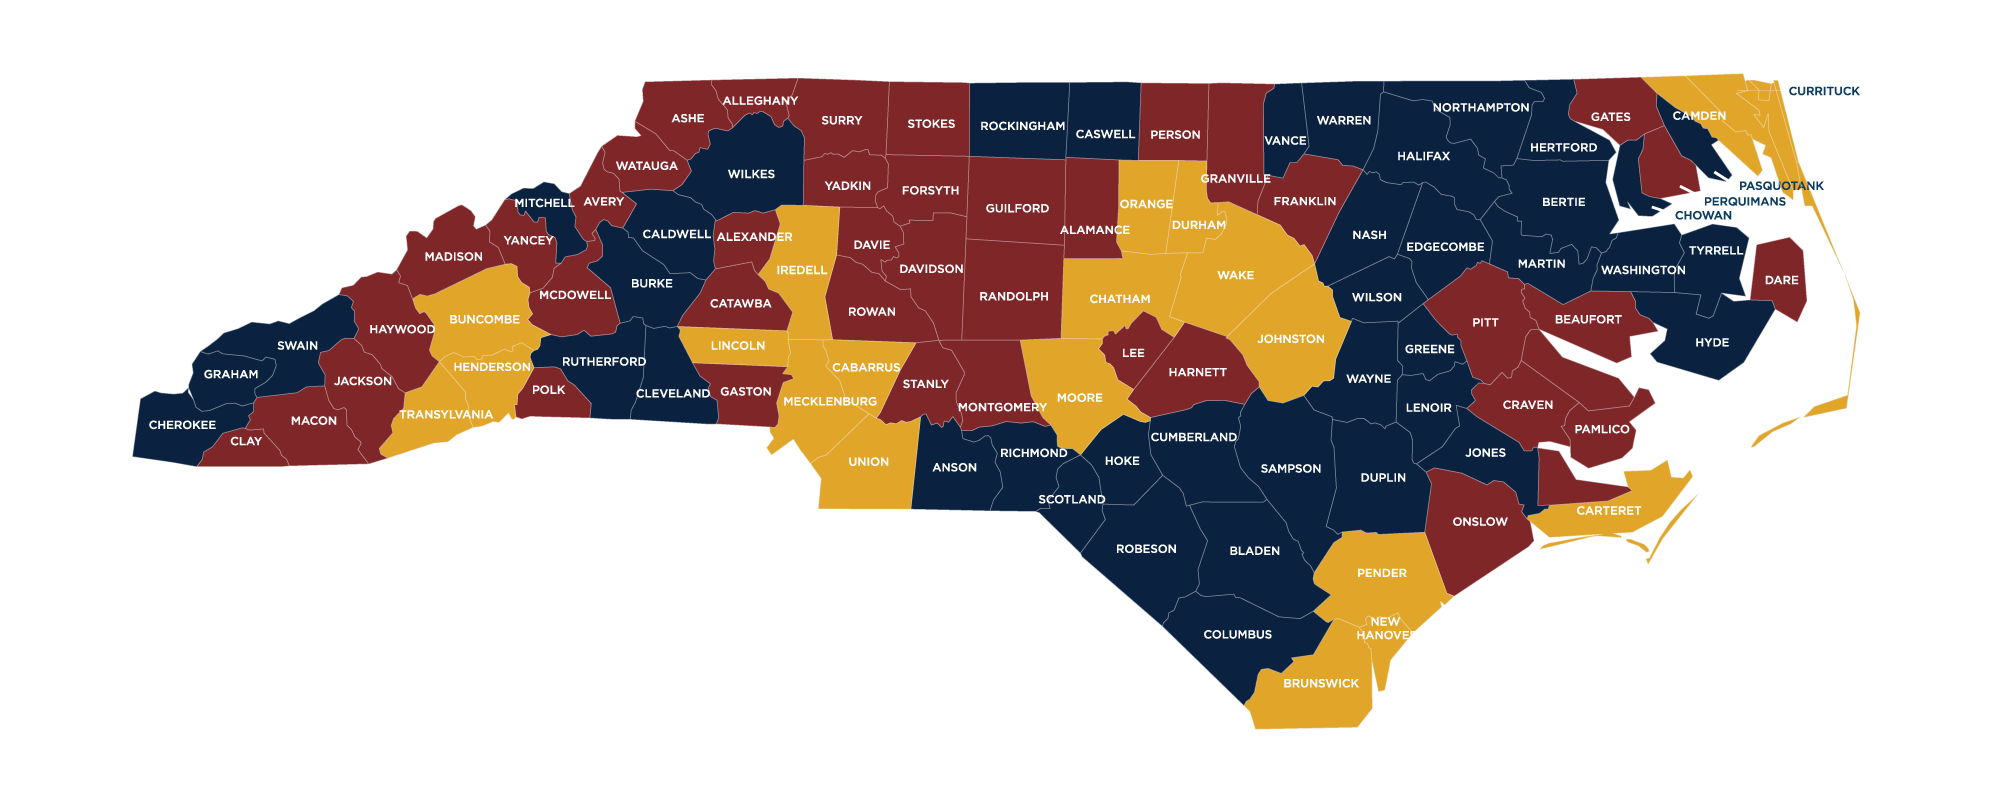 North Carolina county tier designation map